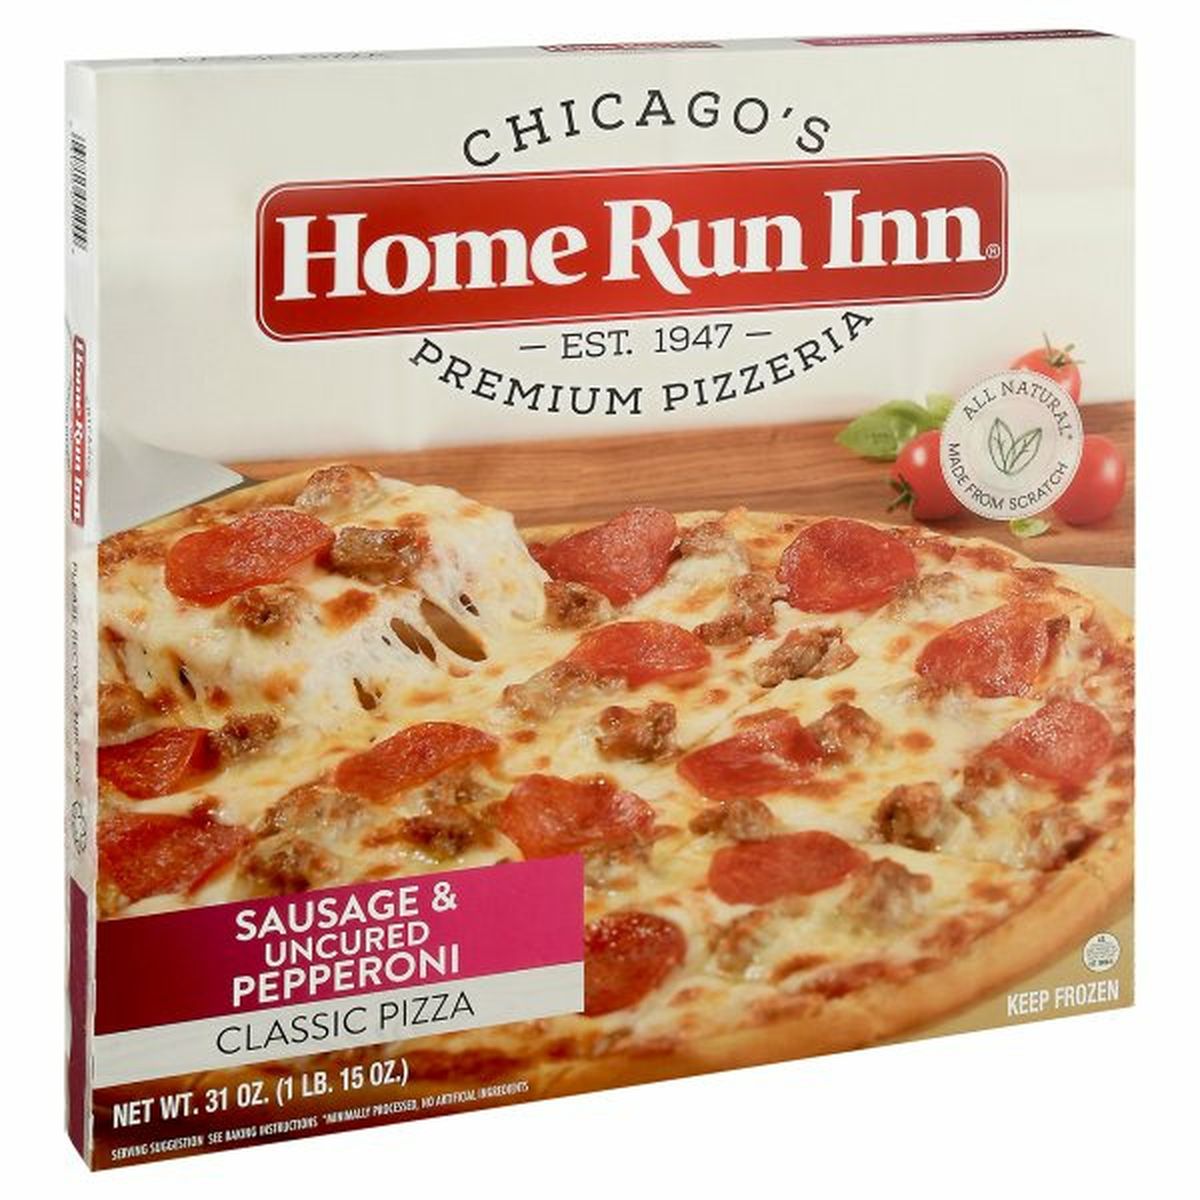 Calories in Home Run Inn Classic Pizza, Sausage & Uncured Pepperoni